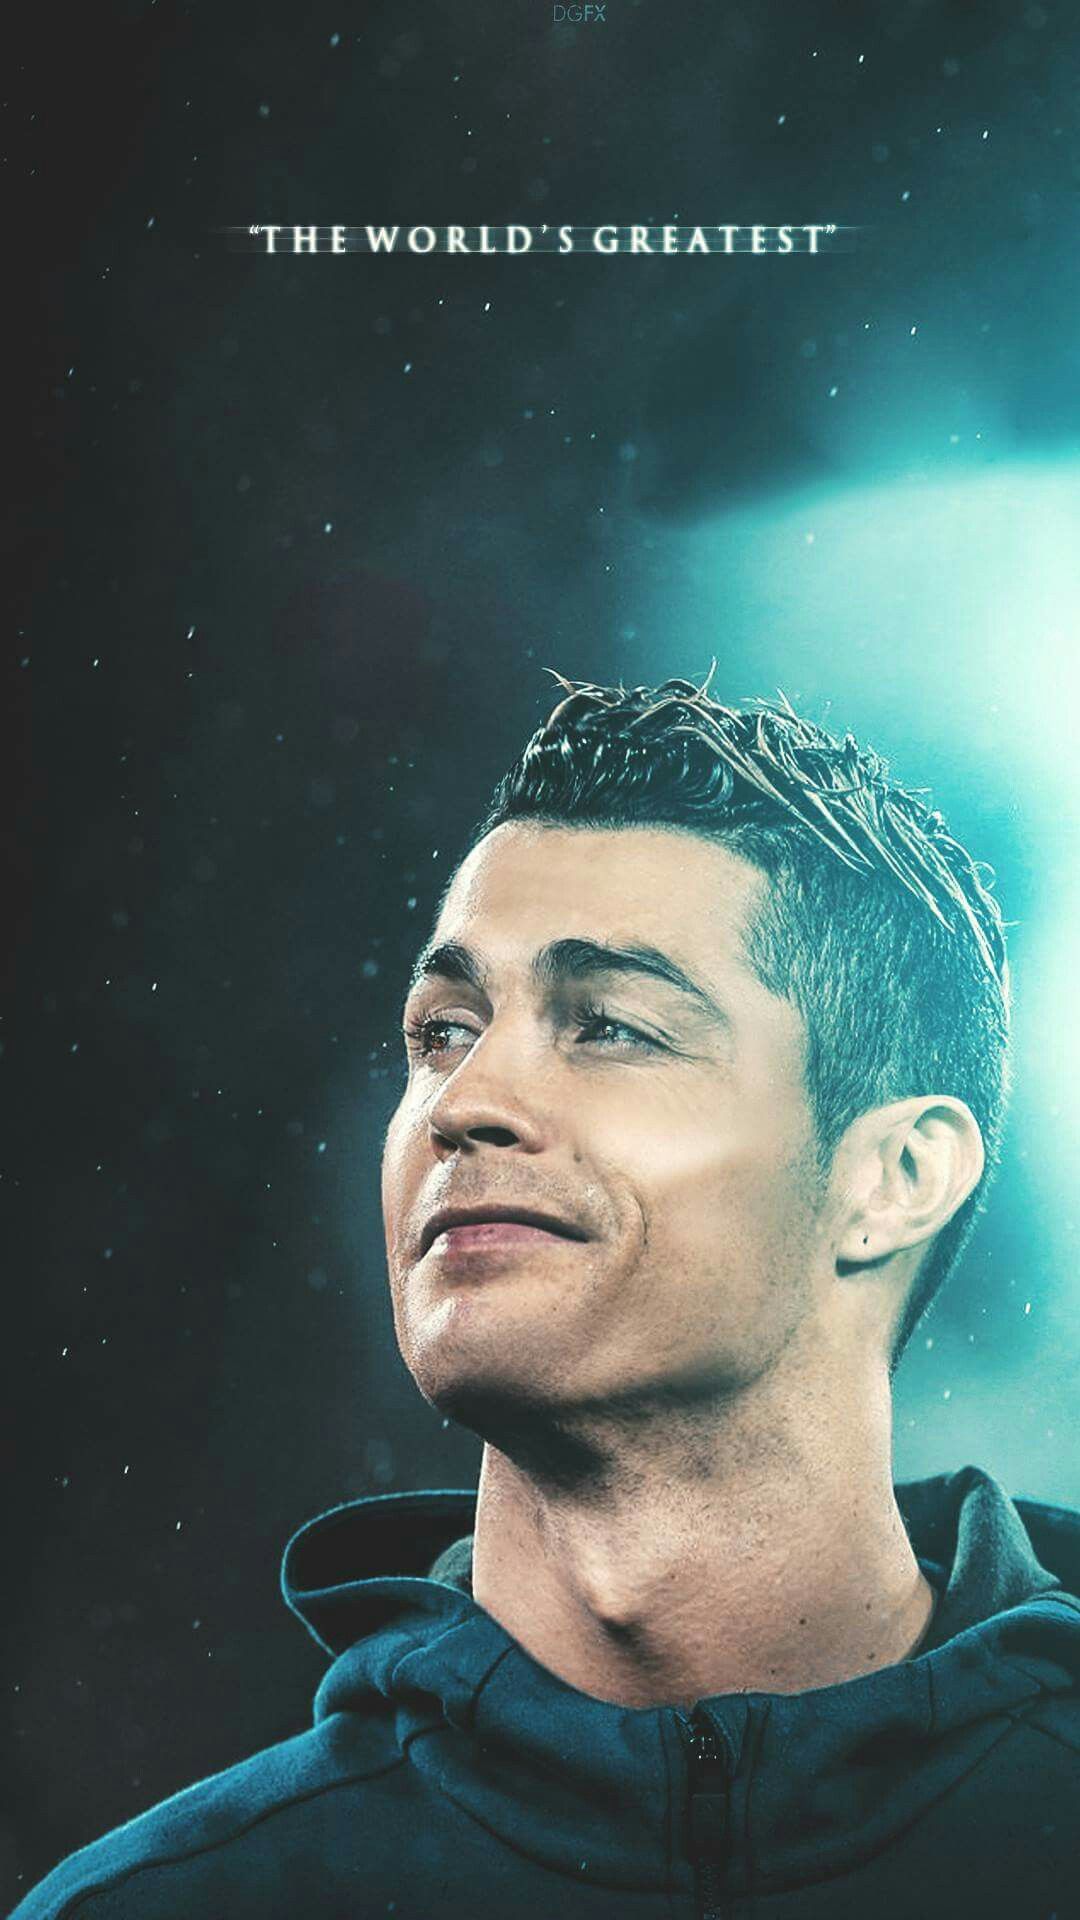 Real Madrid. Cristiano ronaldo wallpaper, Ronaldo wallpaper, Ronaldo real madrid